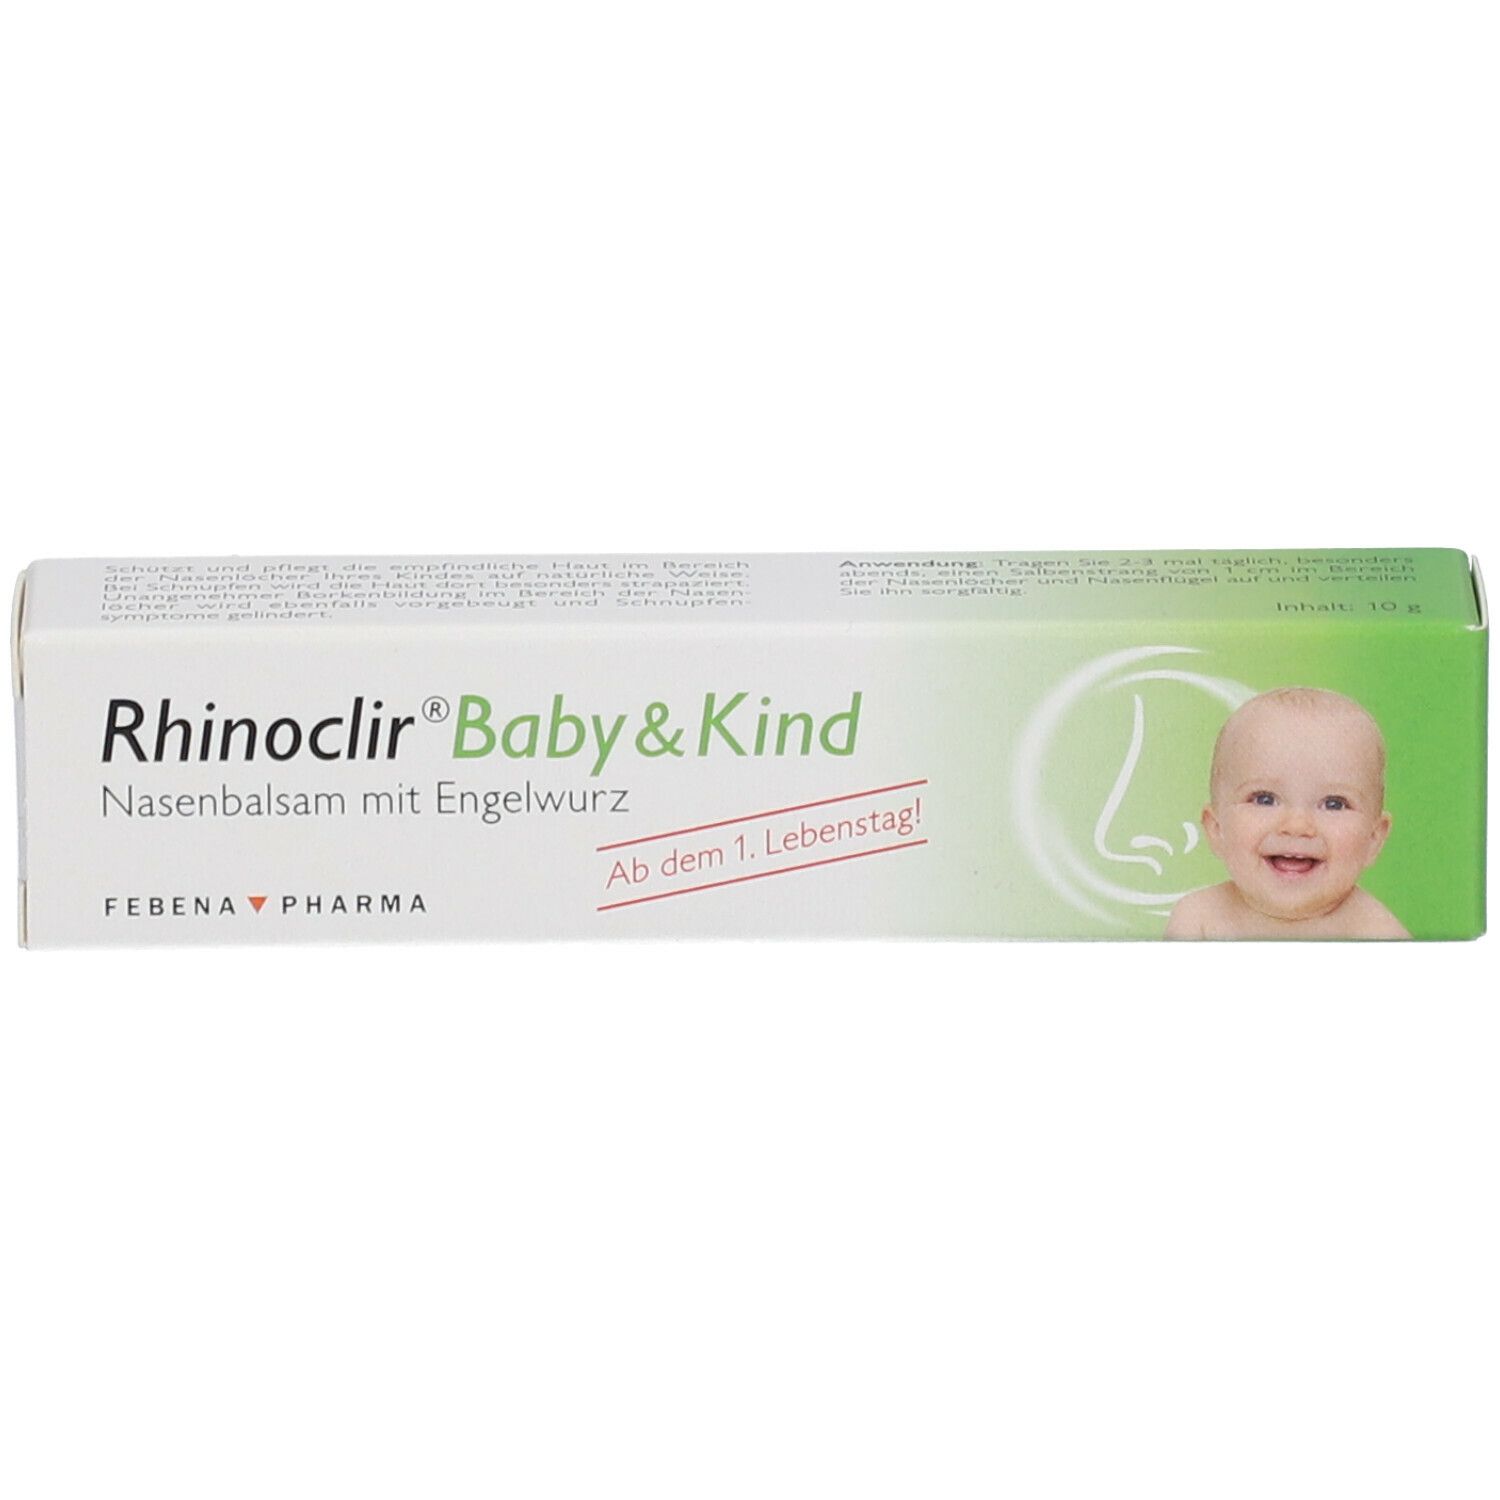 Rhinoclir® Baby & Kind Nasenbalsam mit Engelwurz